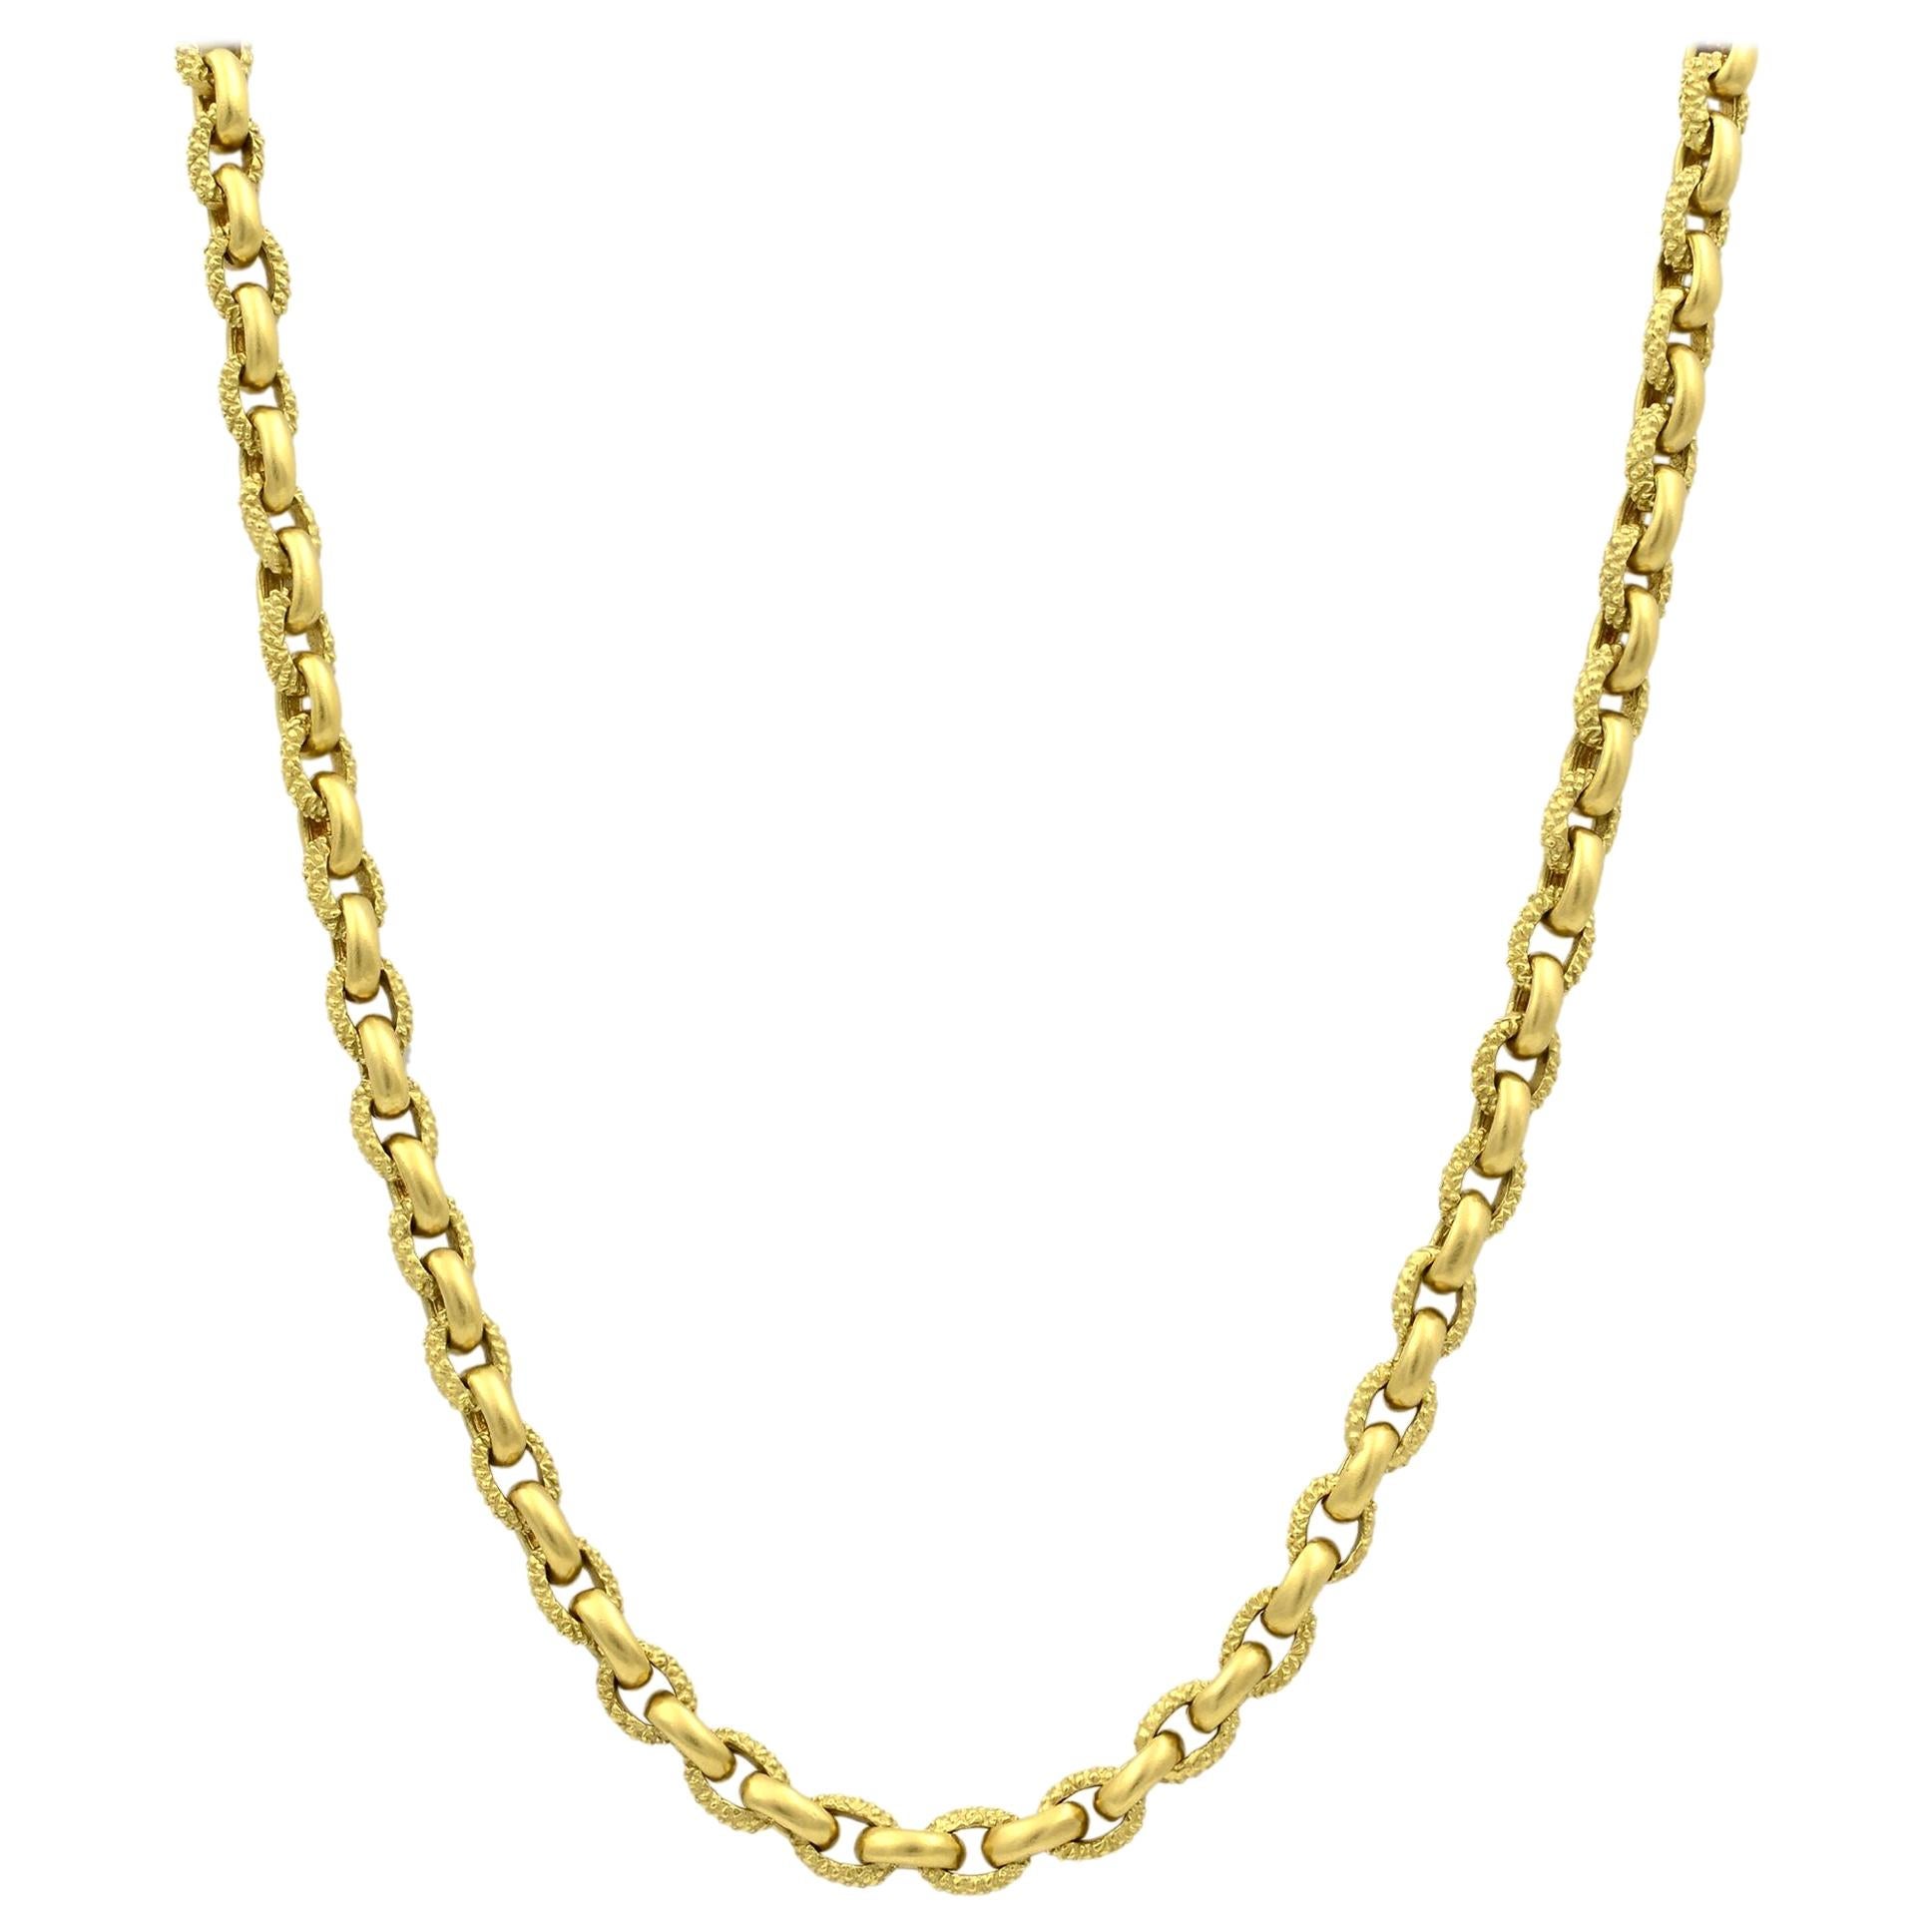 Judith Ripka 18 Karat Yellow Gold Diamond Chain Link Necklace 0.09 Carat